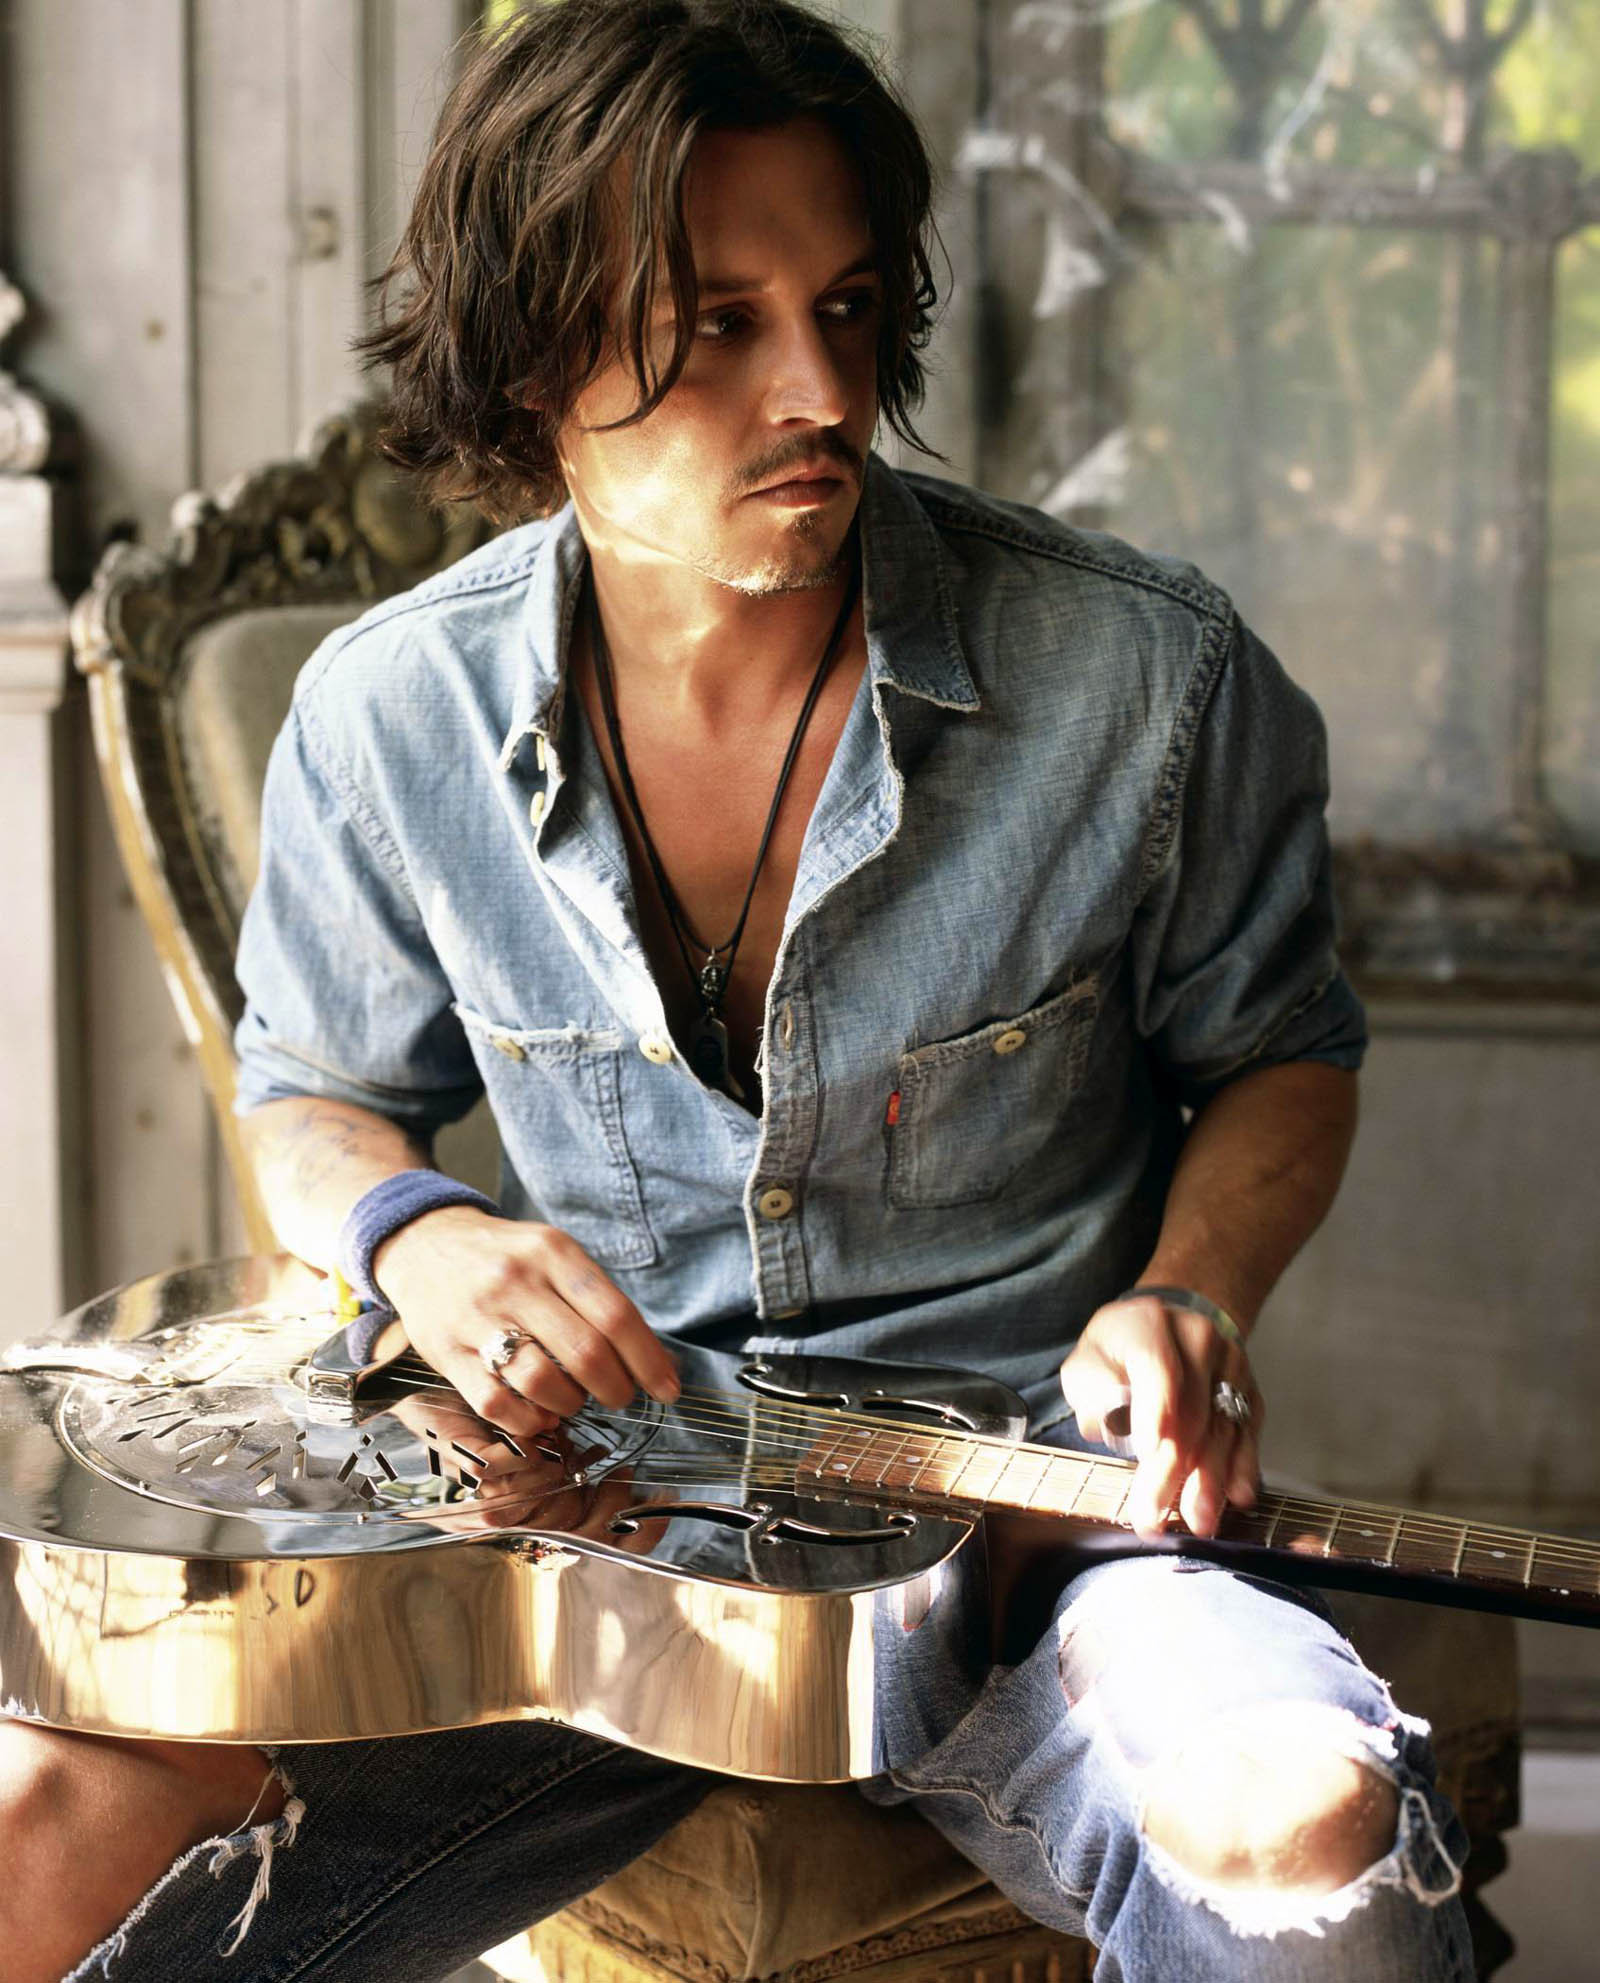 Johnny Depp with guitar - Johnny Depp Photo (35485146) - Fanpop